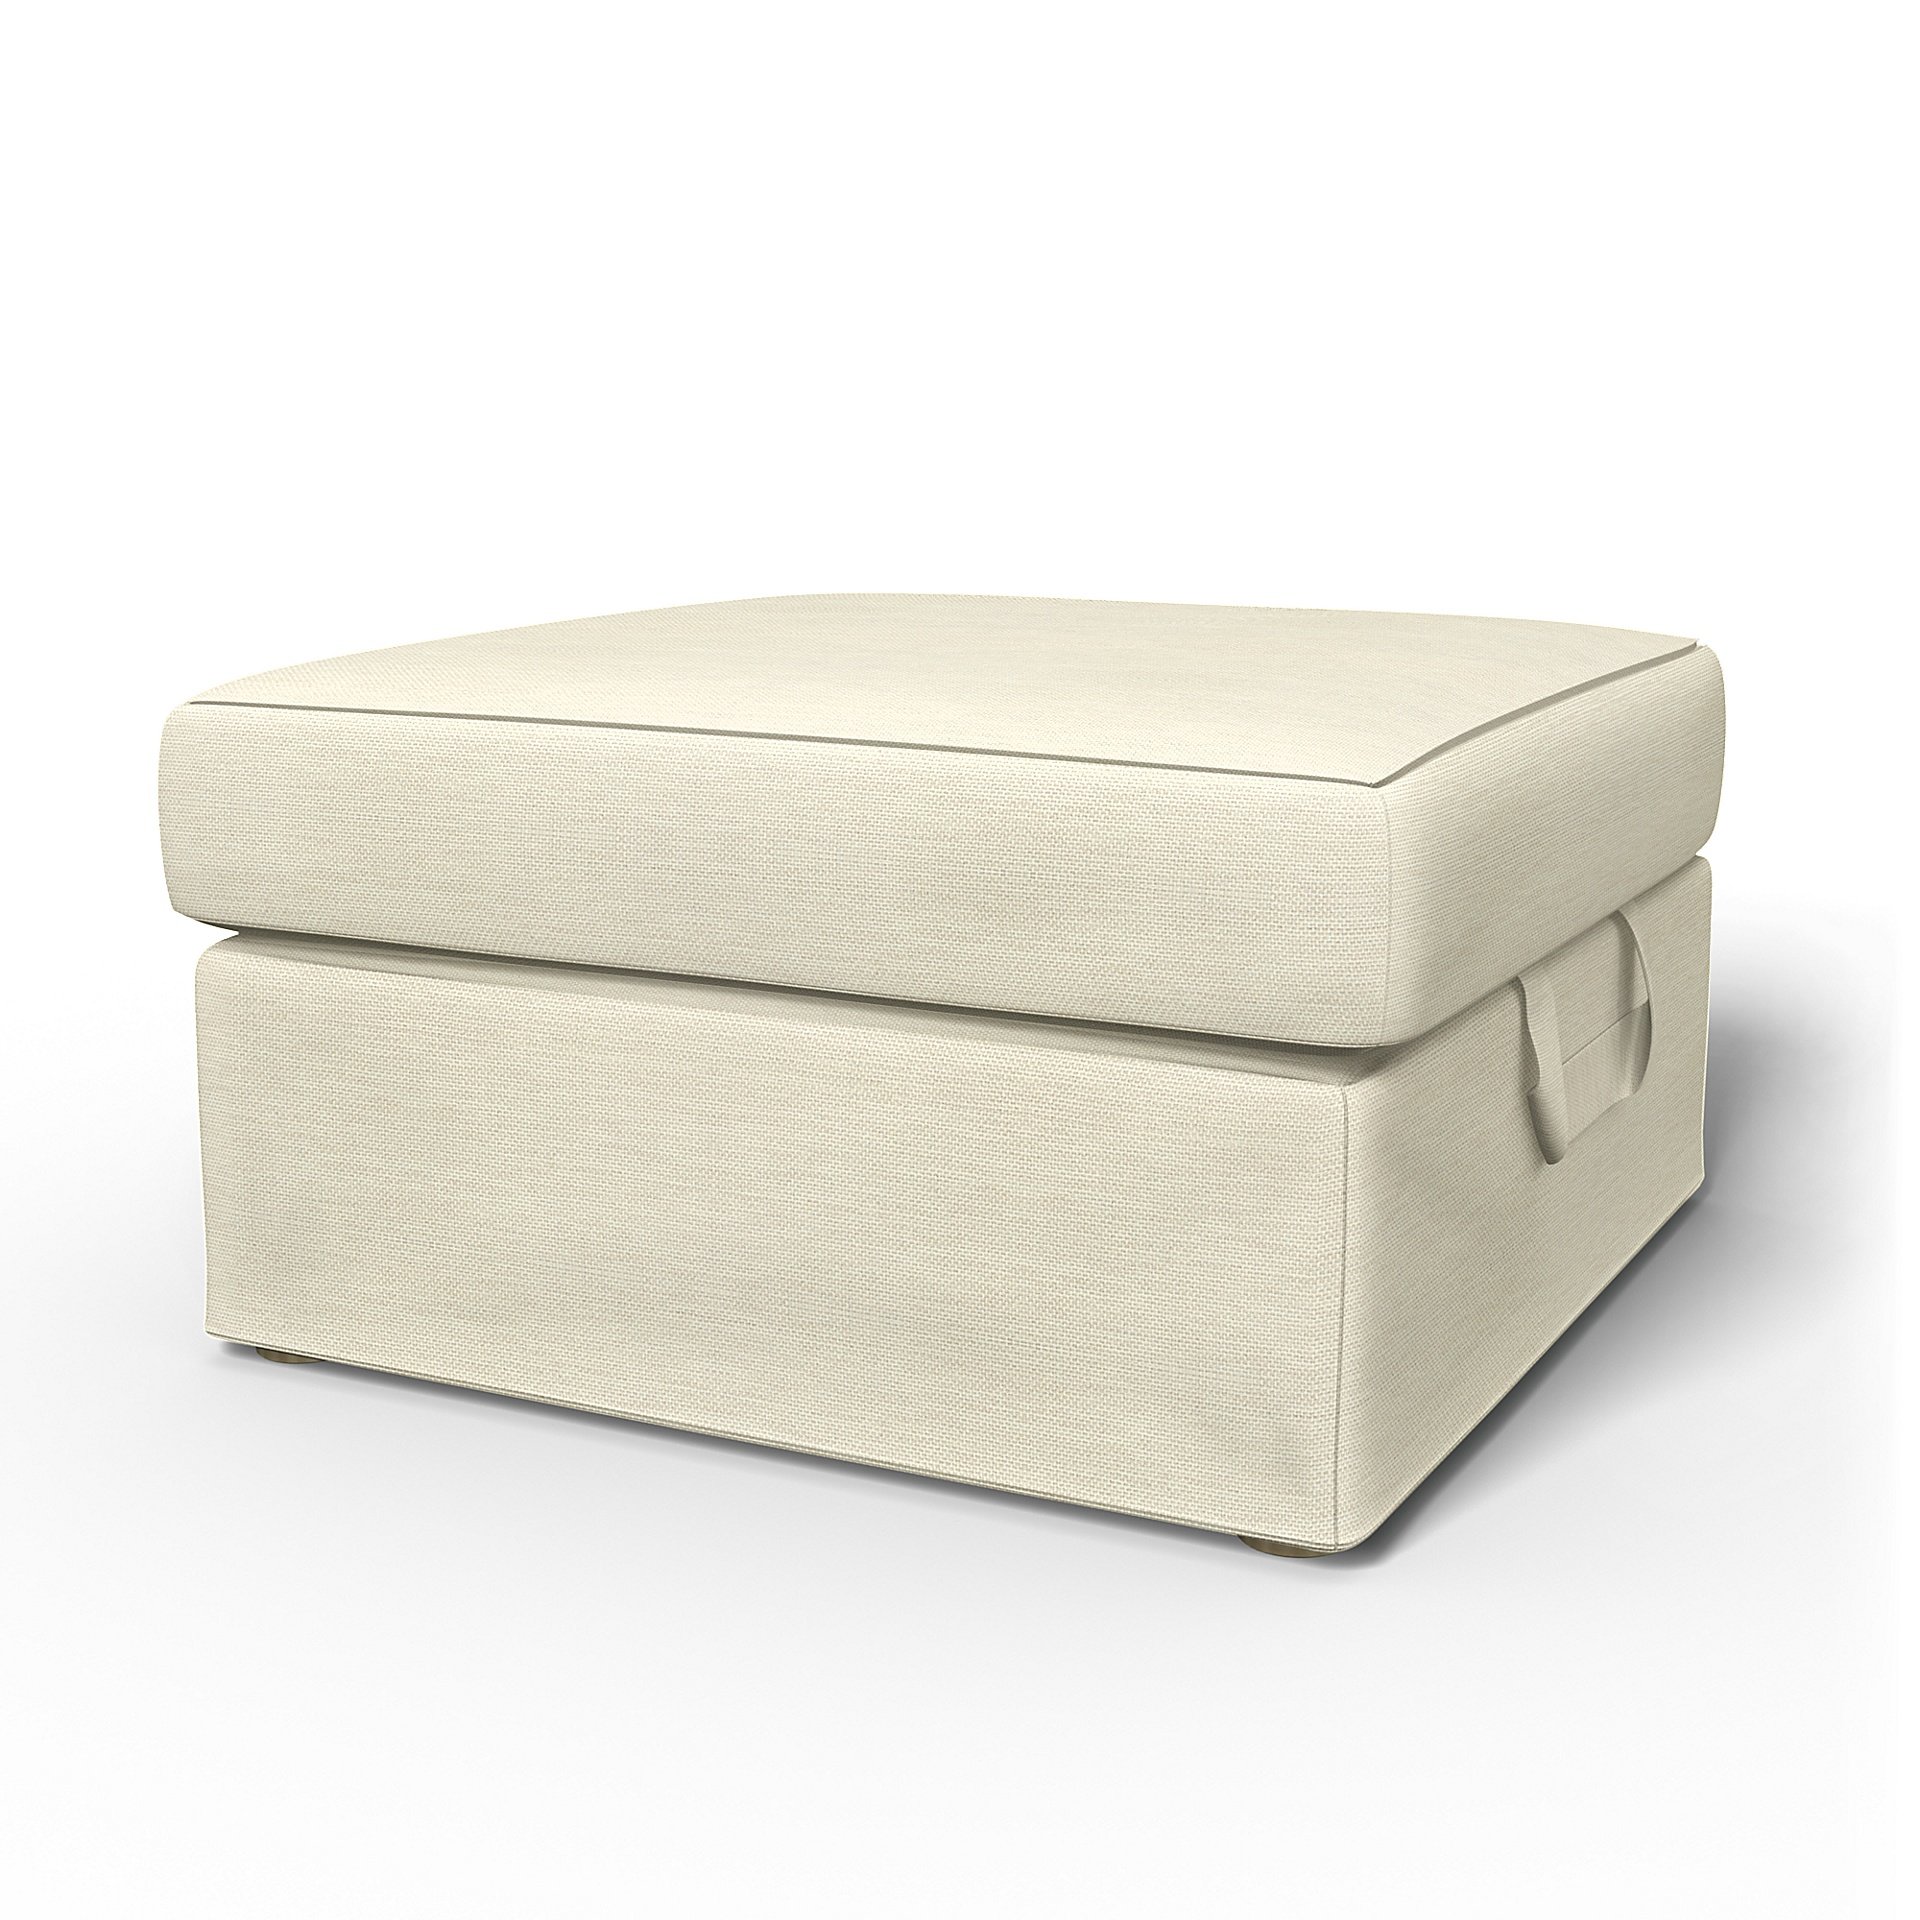 IKEA - Tomelilla Foto Footstool Cover, Sand Beige, Cotton - Bemz